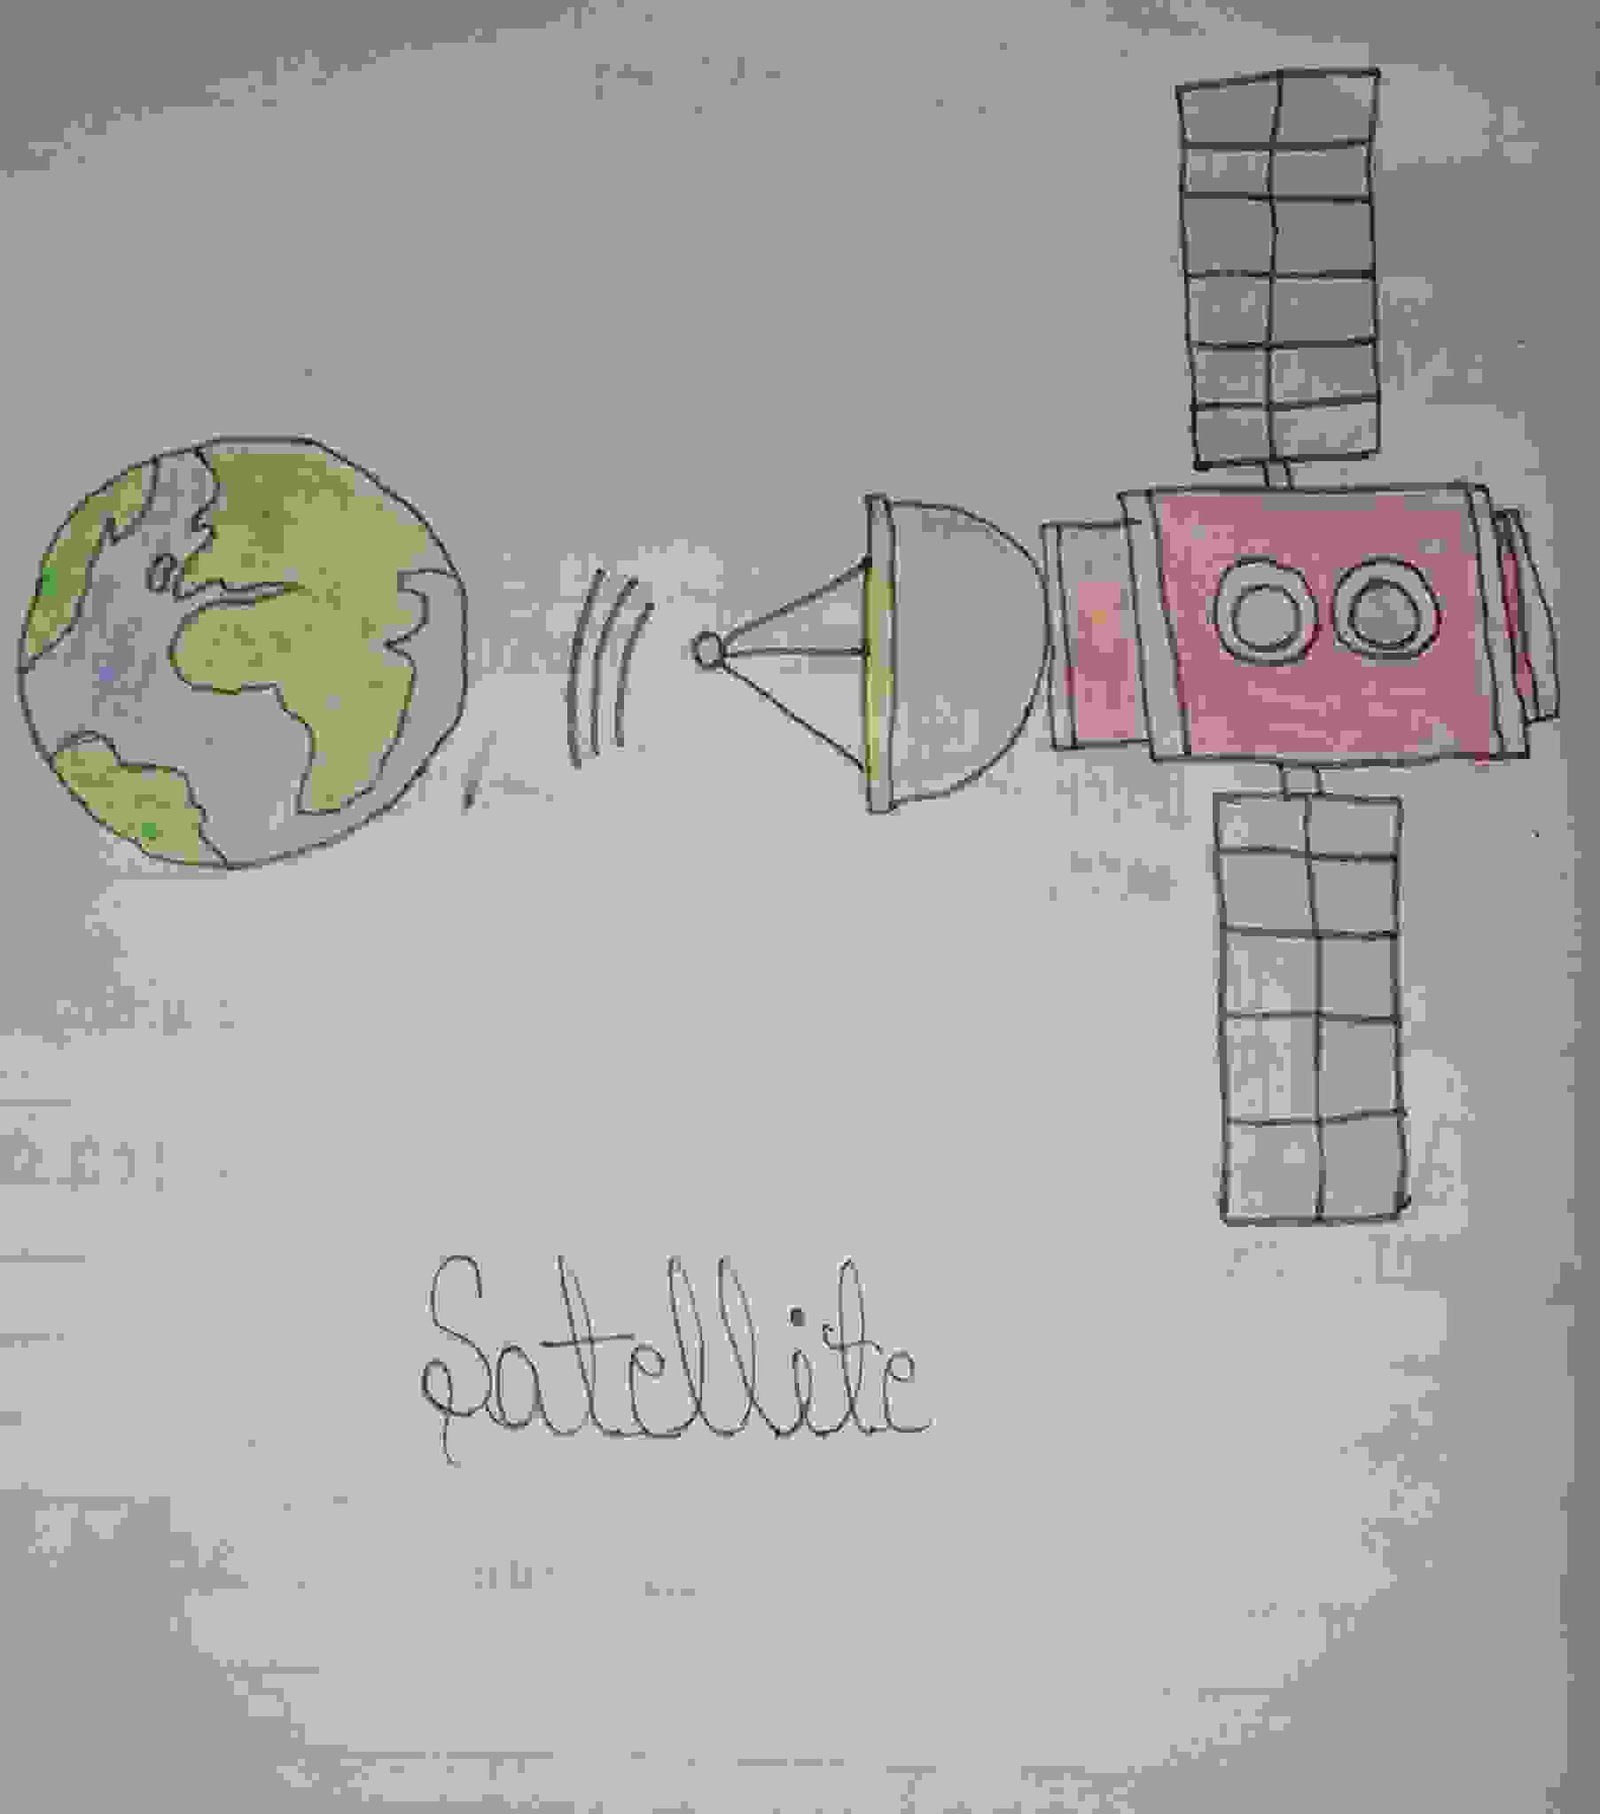 Painting Of Satellite In Sketch Size 303kb Sq Cm Price 100